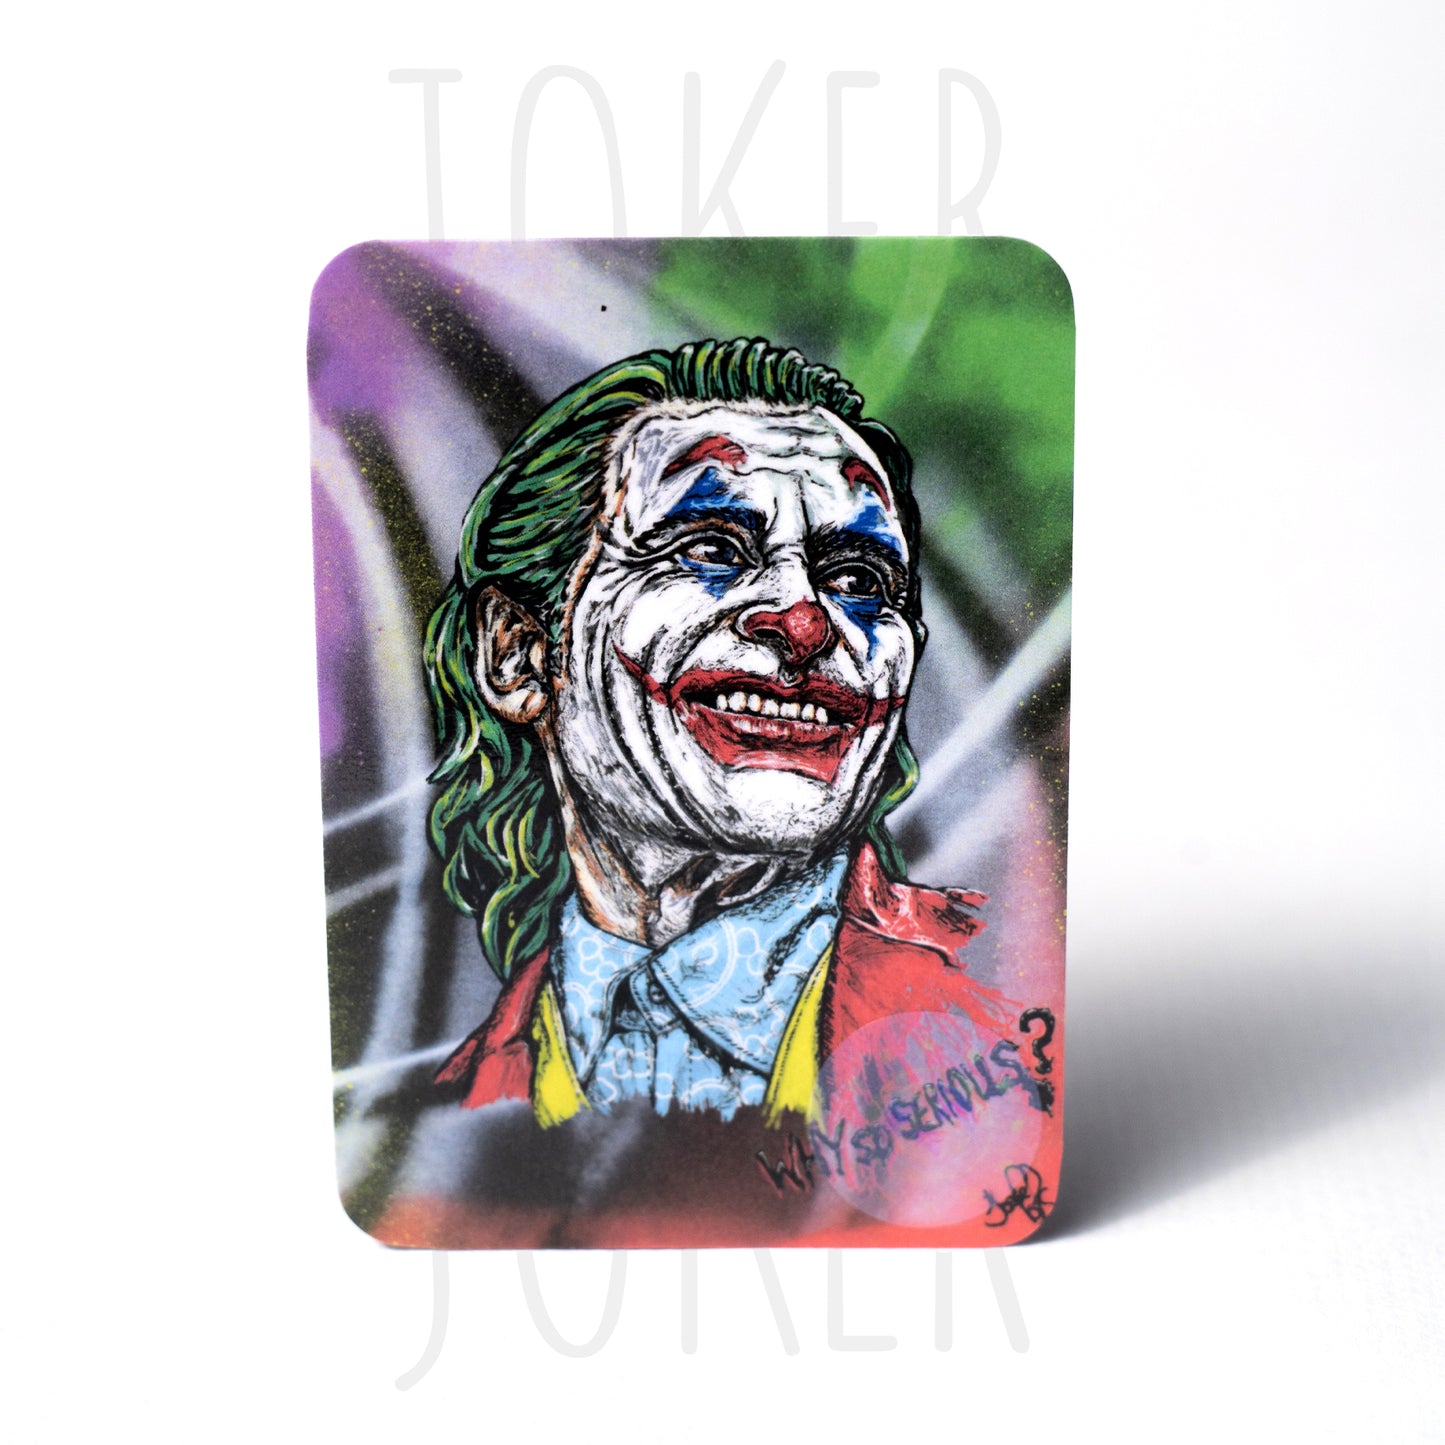 WILD CARD Joker